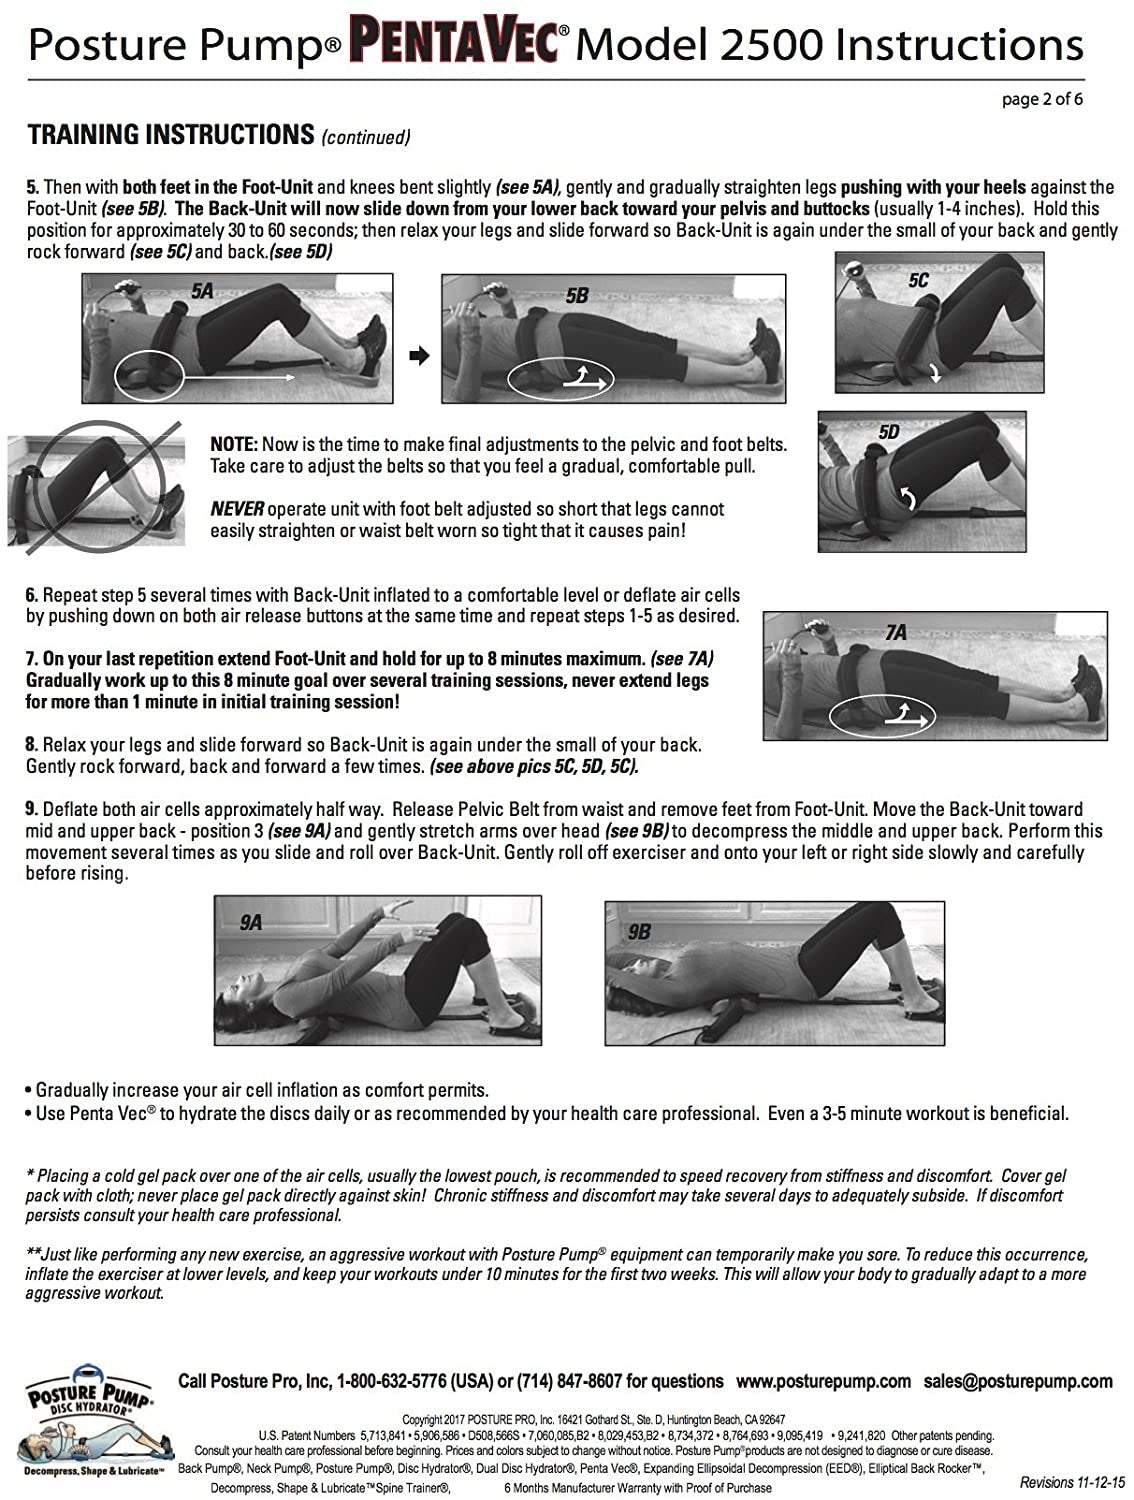 Posture Pump® Relief for Sciatica and Low Back Pain - Penta Vec® Model 2500